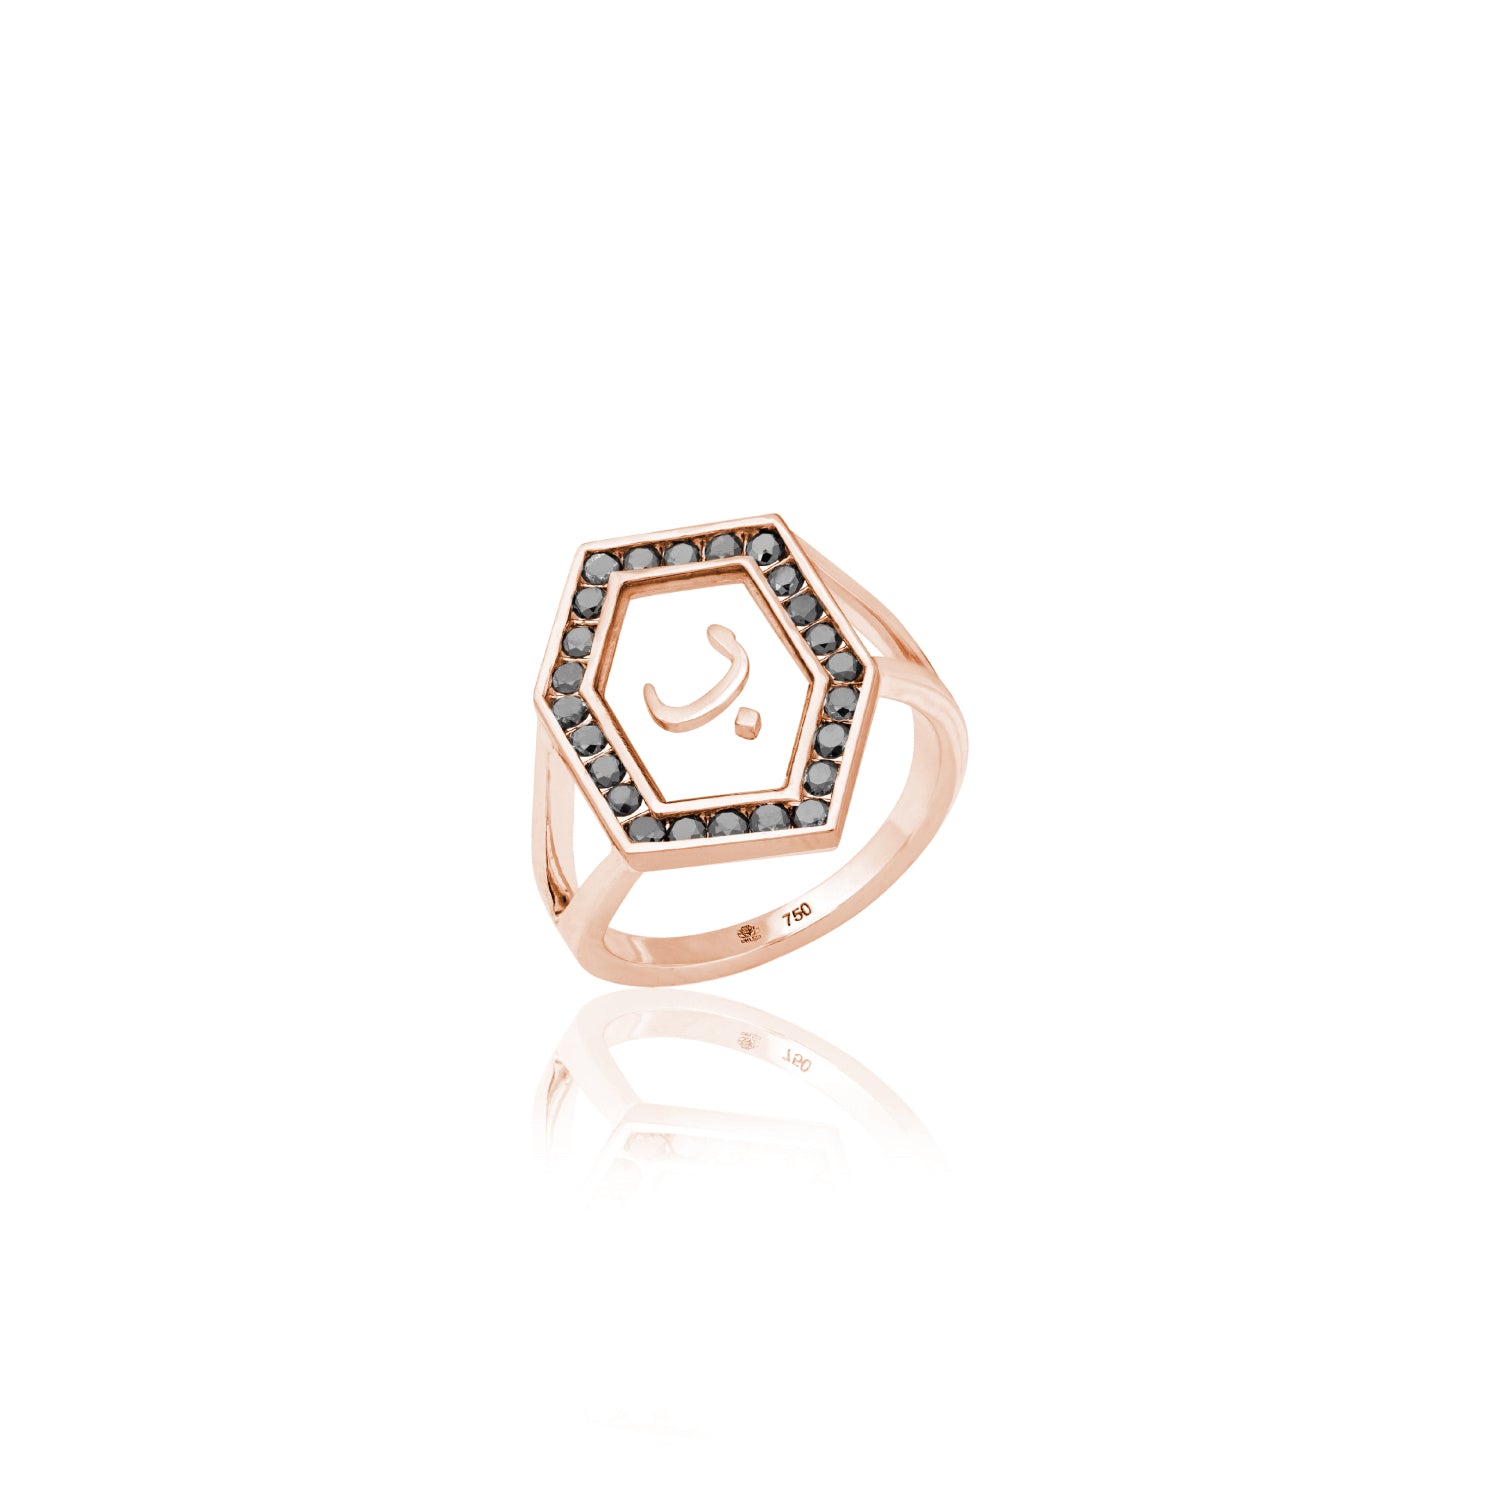 Qamoos 1.0 Letter ب Black Diamond Ring in Rose Gold